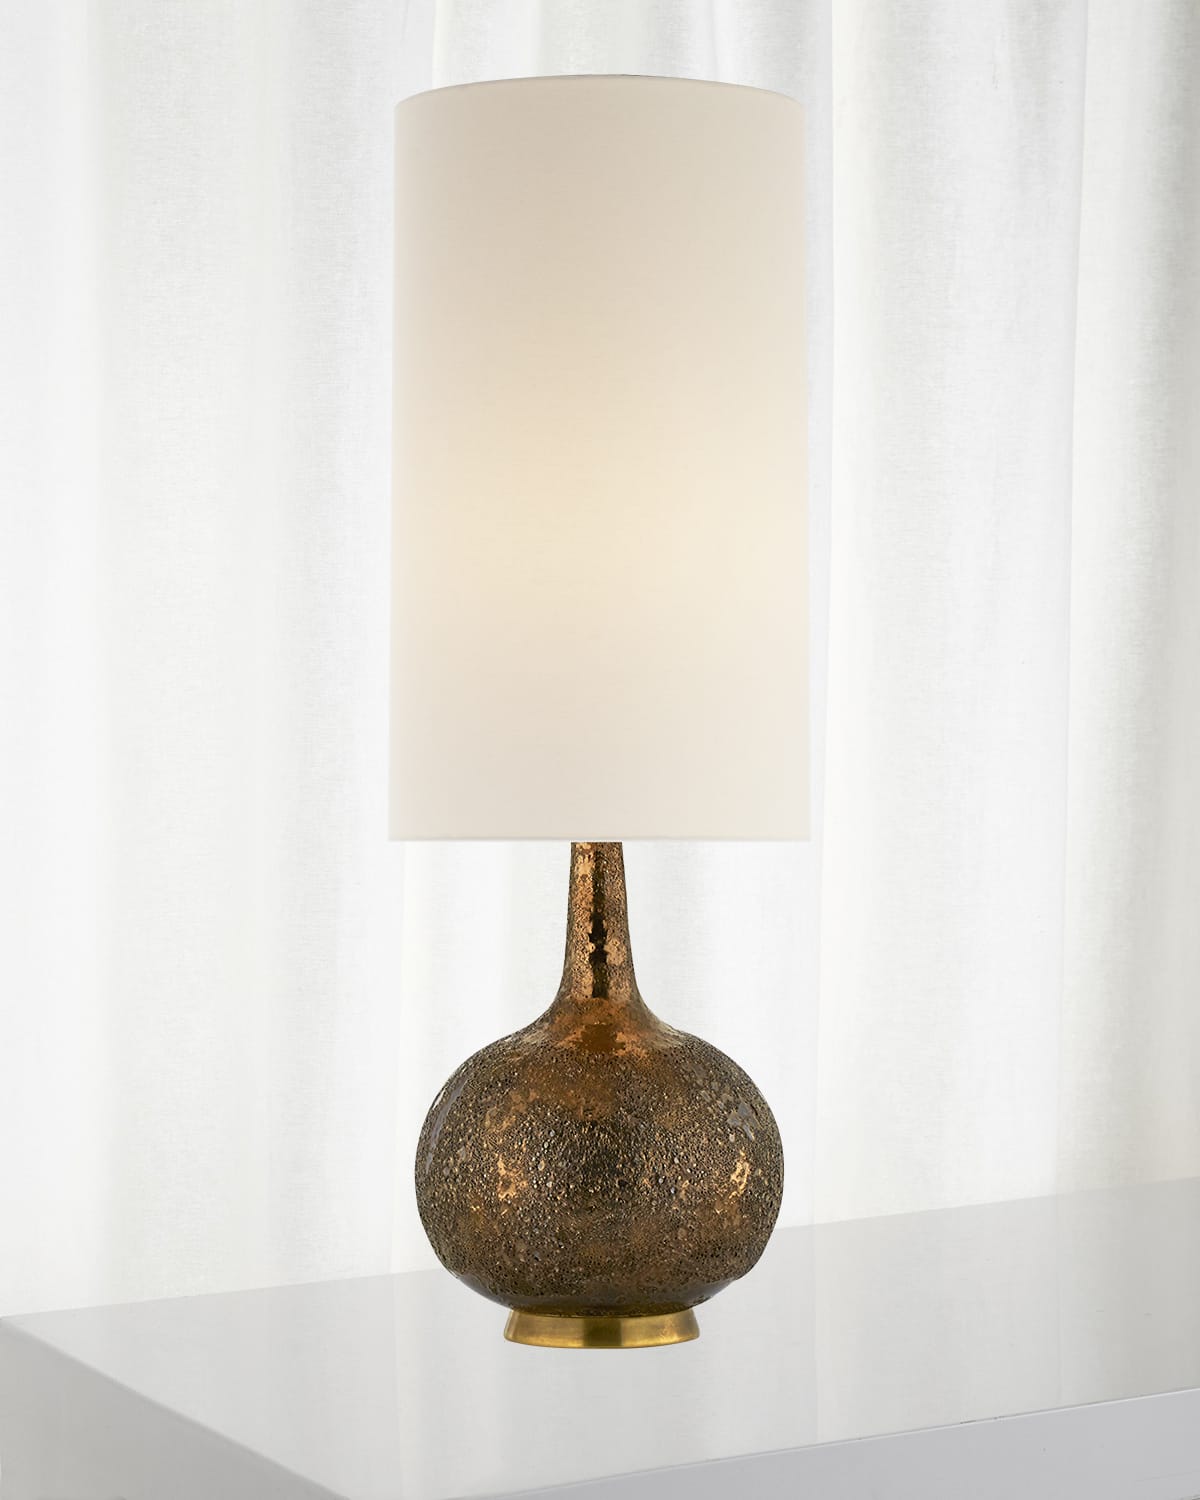 Aerin Table Lamp Neiman Marcus, Morton Table Lamp Aerin